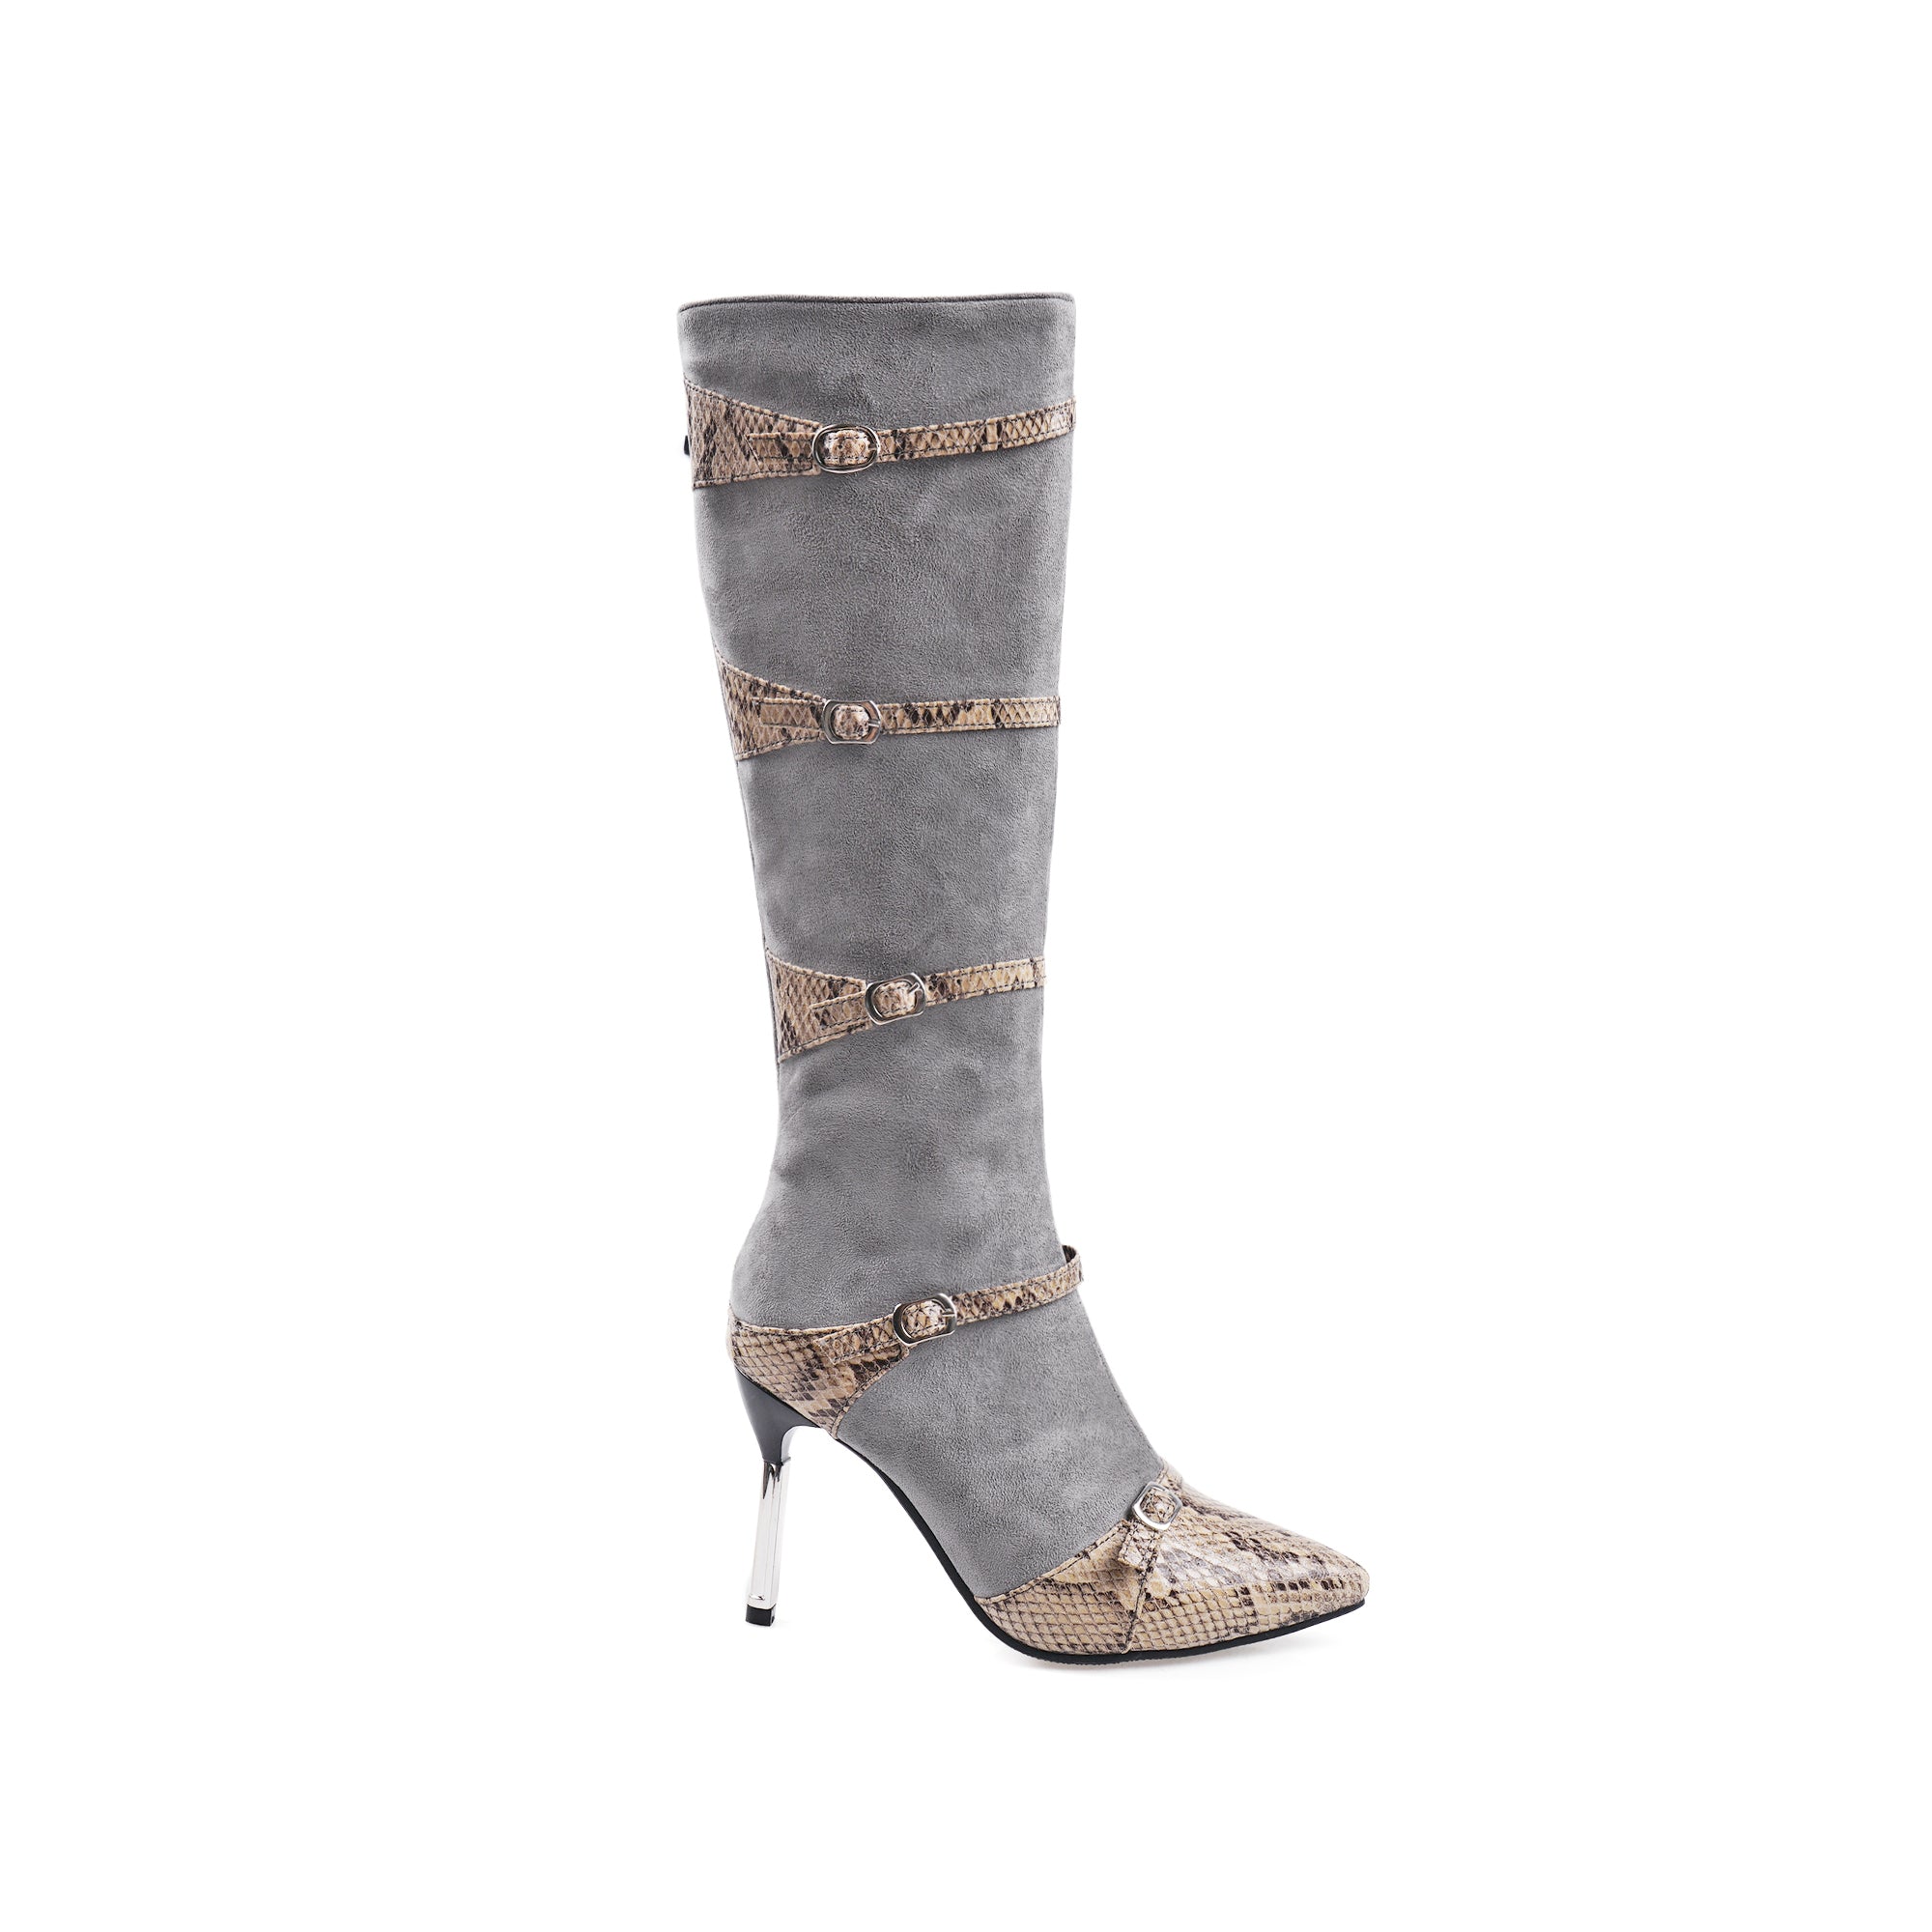 Bigsizeheels Sexy pointed zipper stiletto boots - Gray freeshipping - bigsizeheel®-size5-size15 -All Plus Sizes Available!